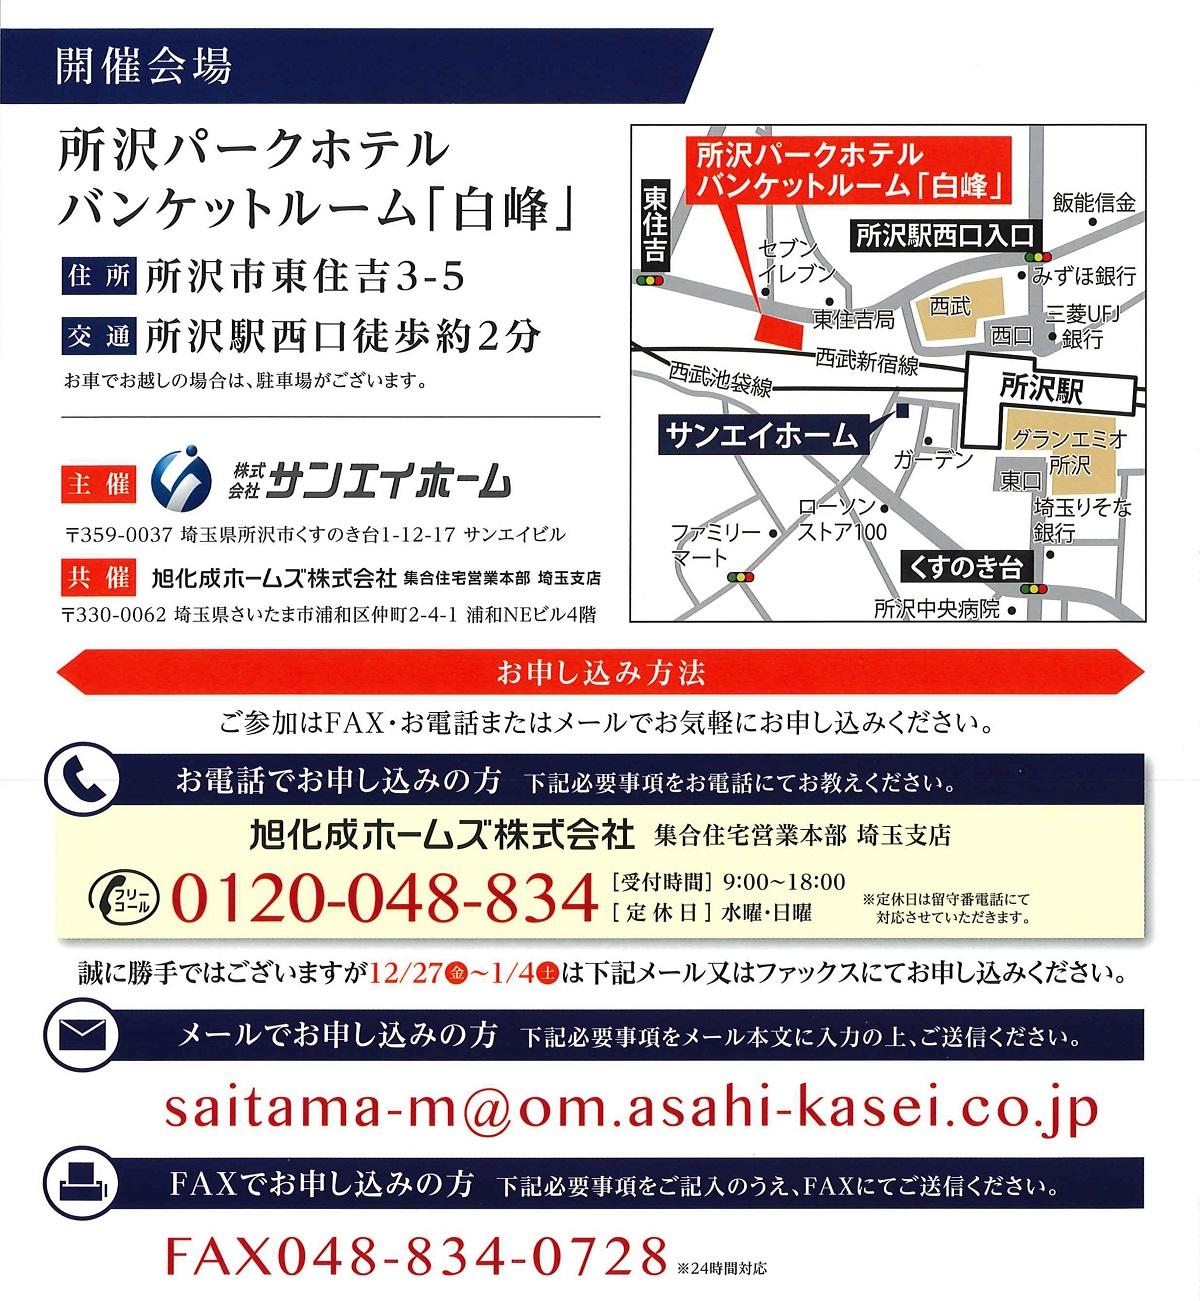 https://www.asahi-kasei.co.jp/maison/hebelplaza/blog/18/urawa/item/2020/200109-2.jpg